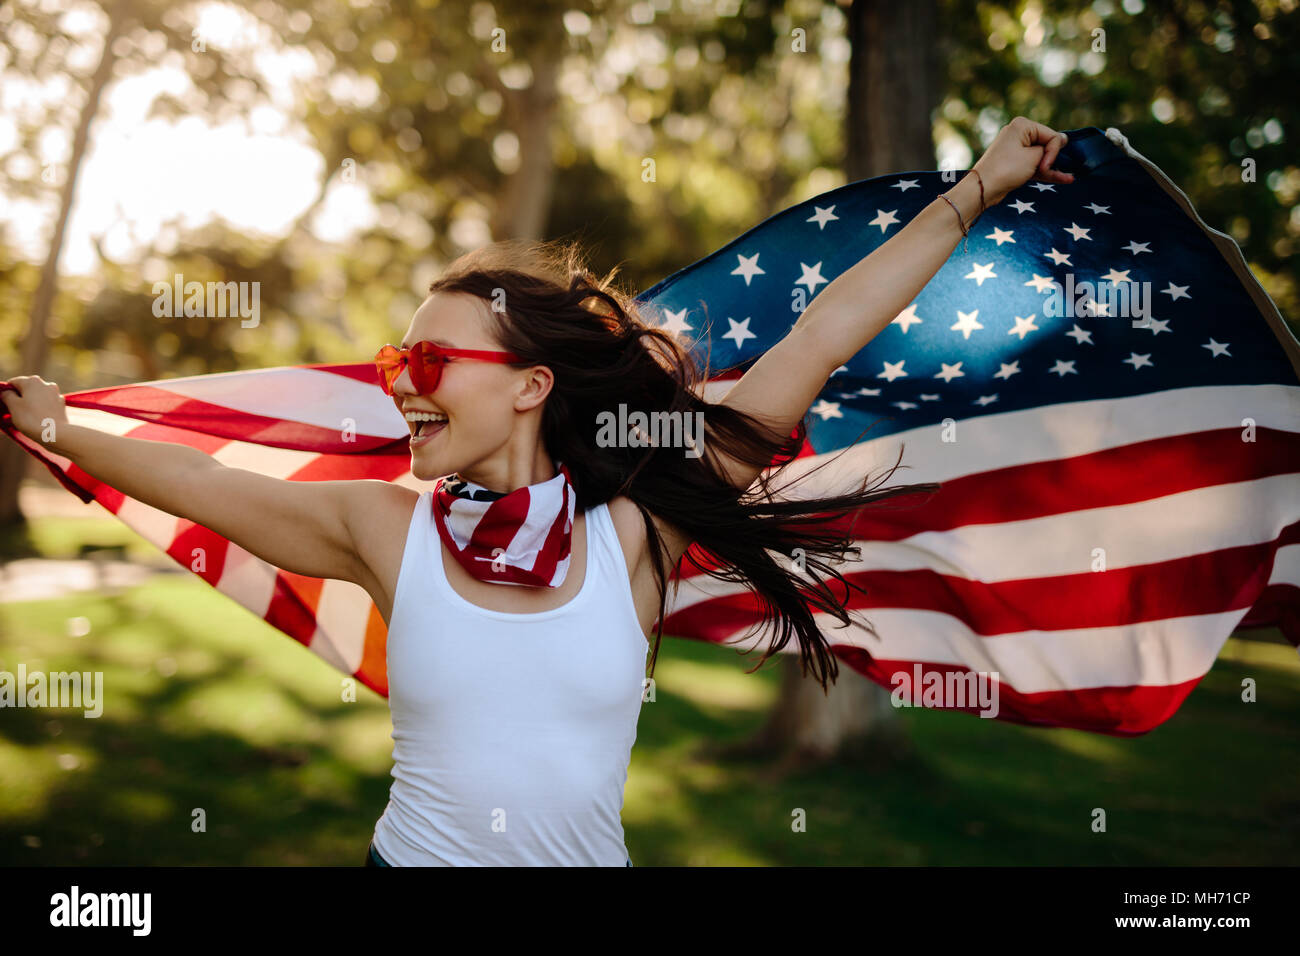 Young woman enjoying in park holding USA flag. American girl avec drapeau national s'amuser au parc. Banque D'Images